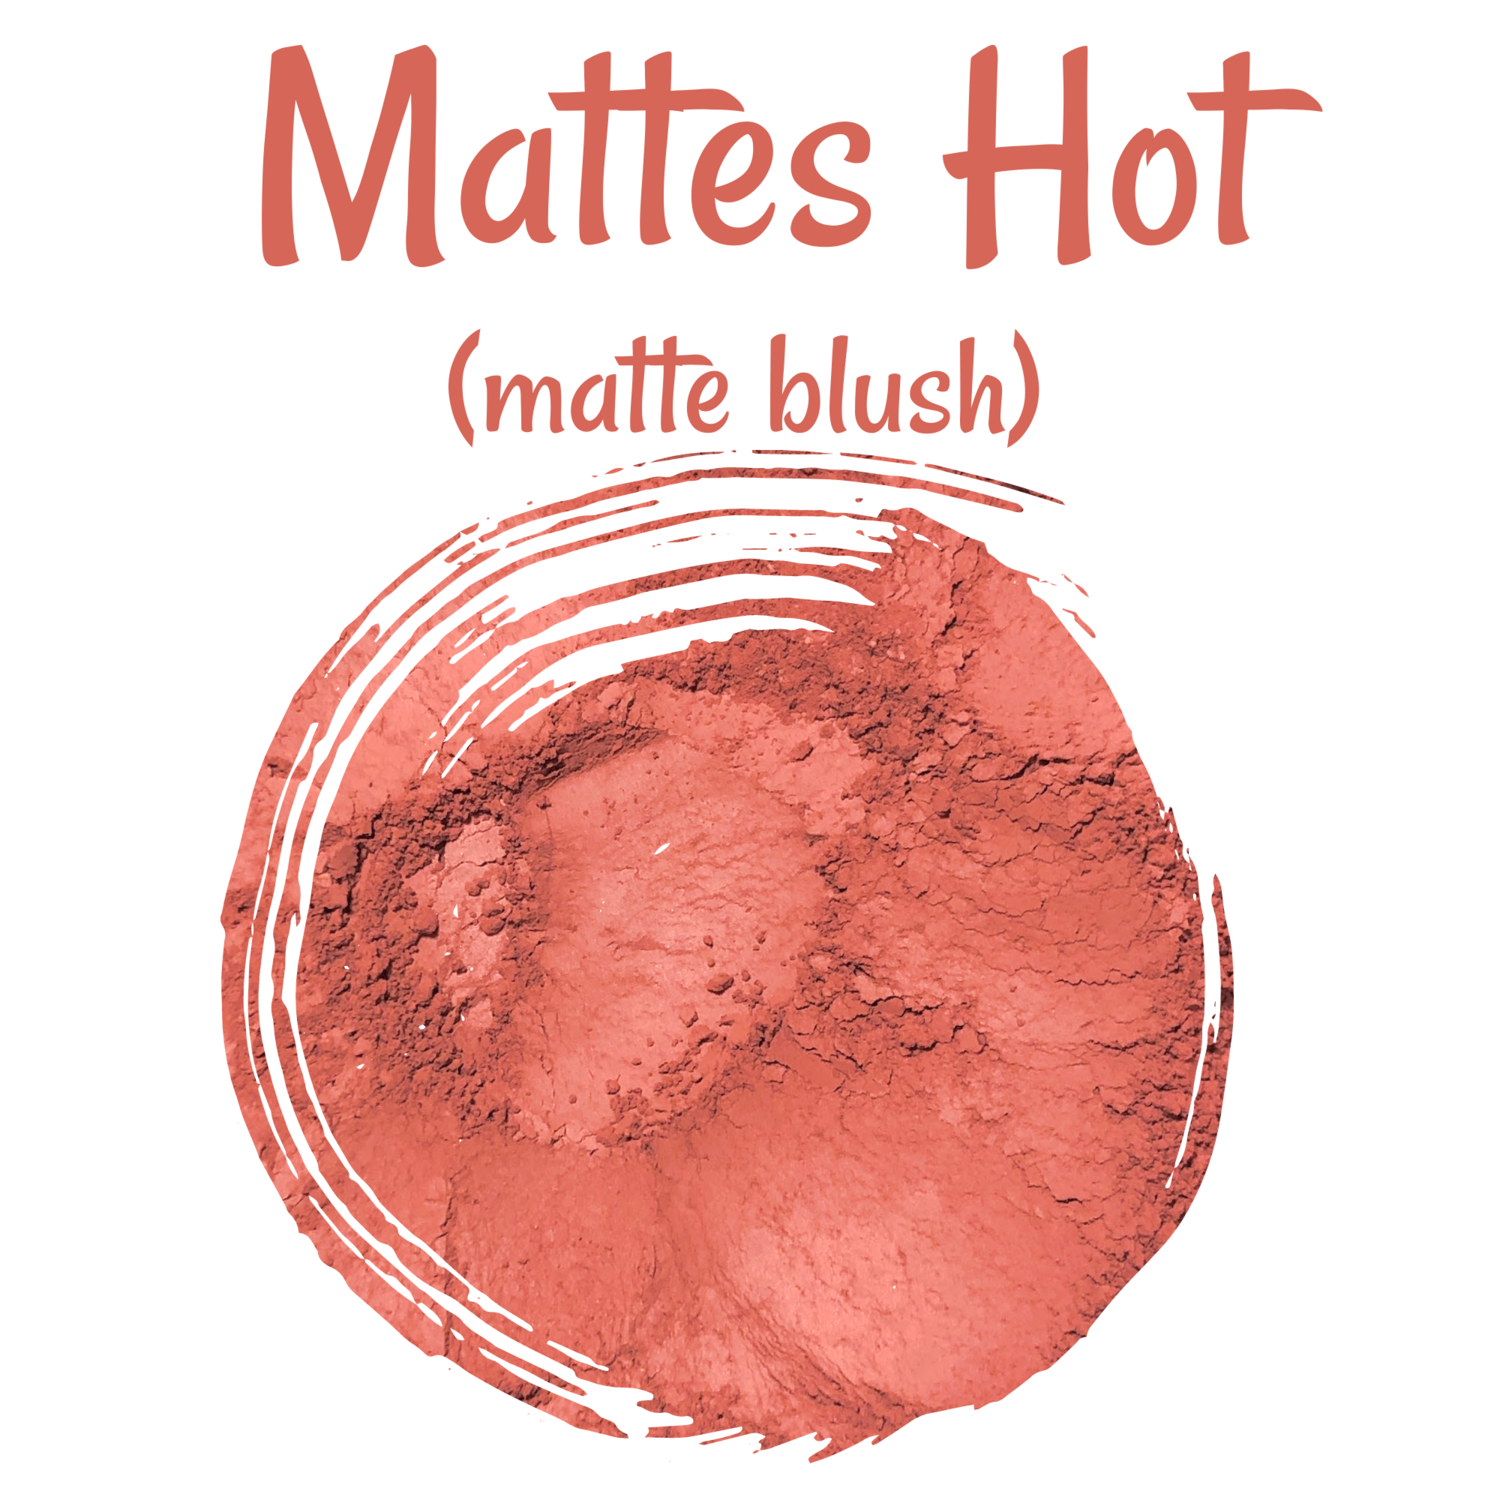 Blush-Mattes Hot